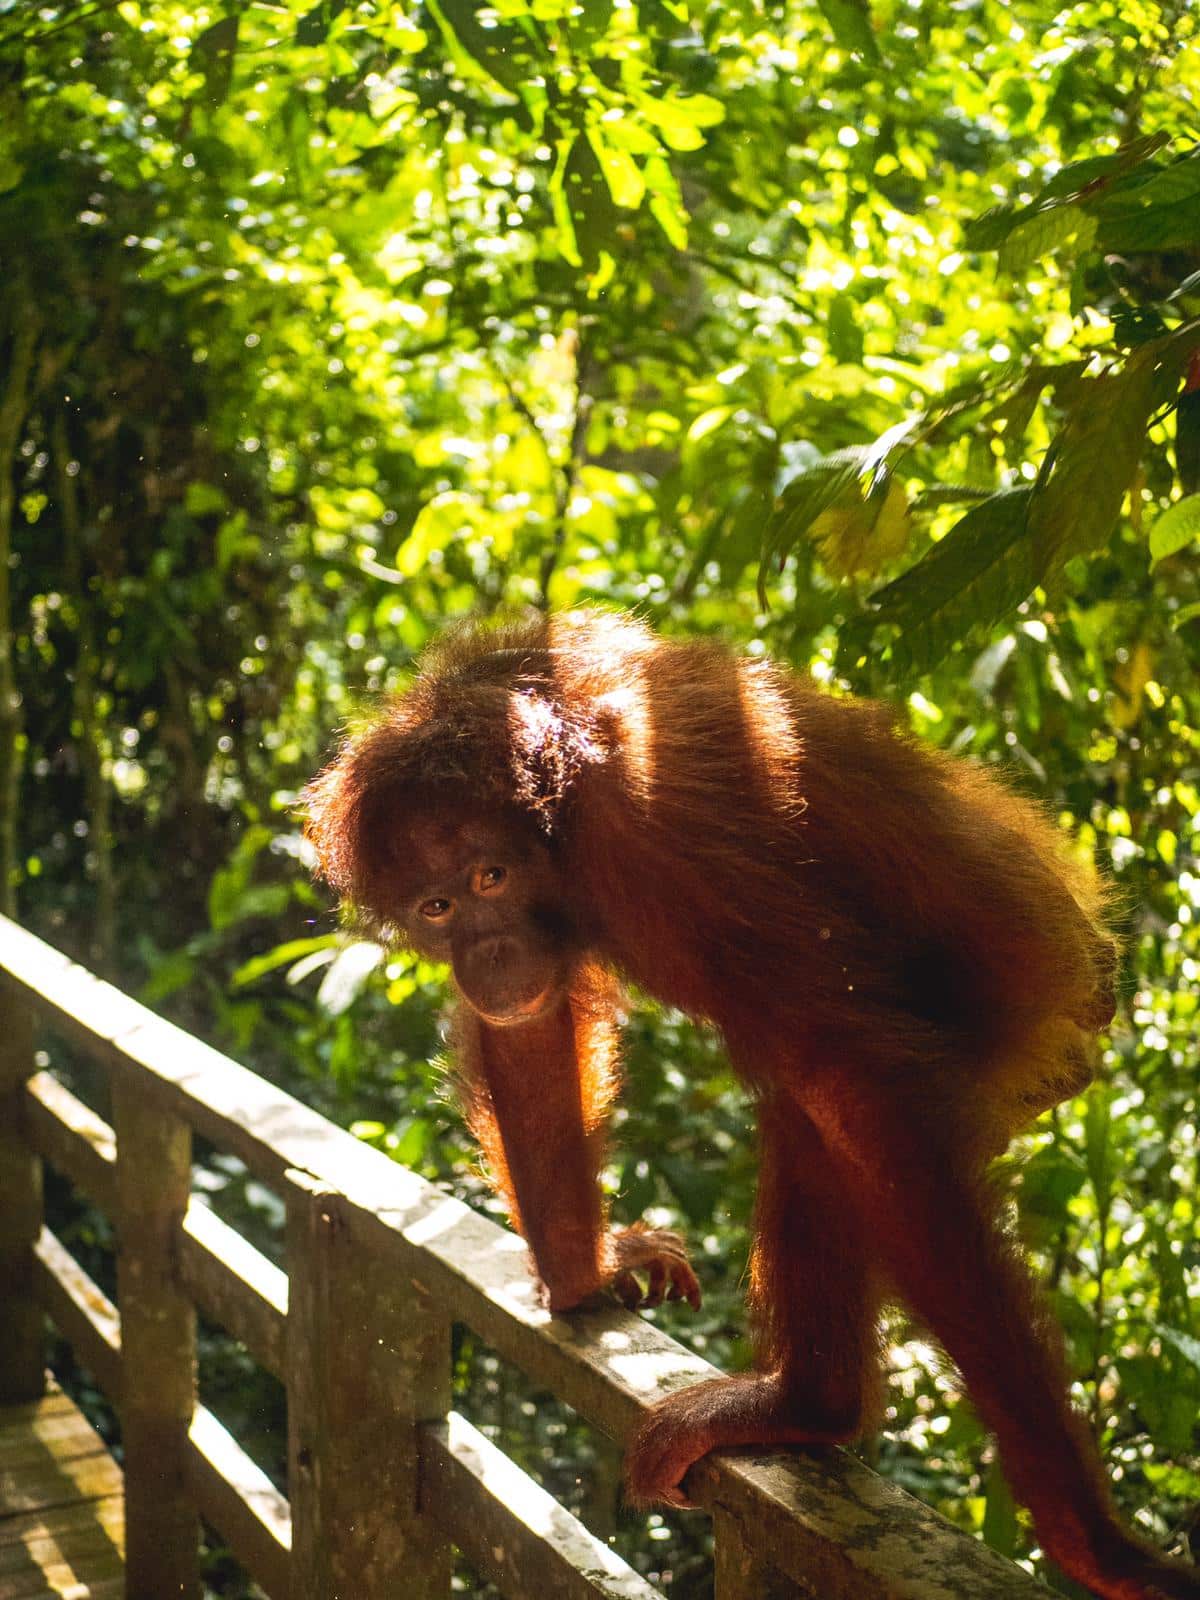 Borneo Orangutan - The Best Place to See Wild Orangutan's